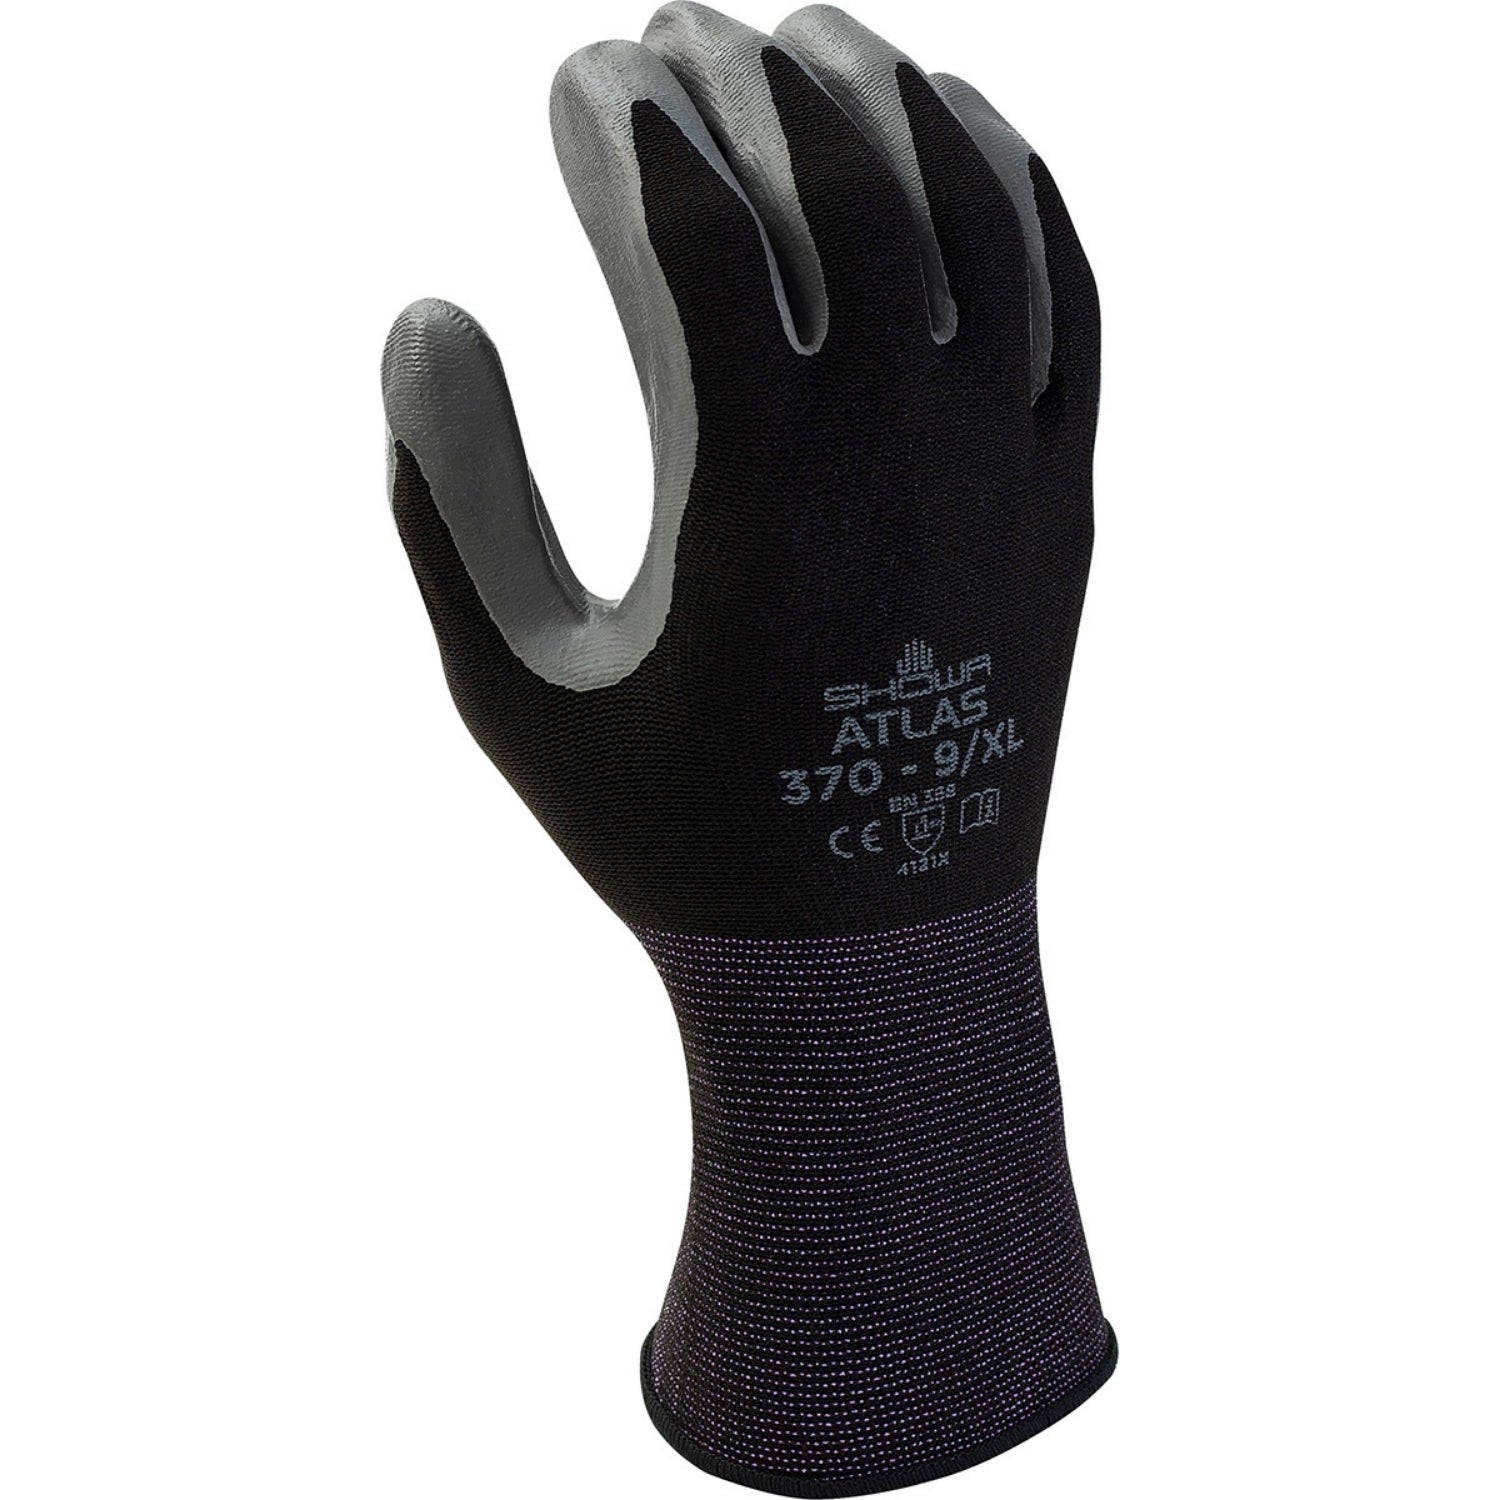 SHOWA 370B - General Purpose Gloves